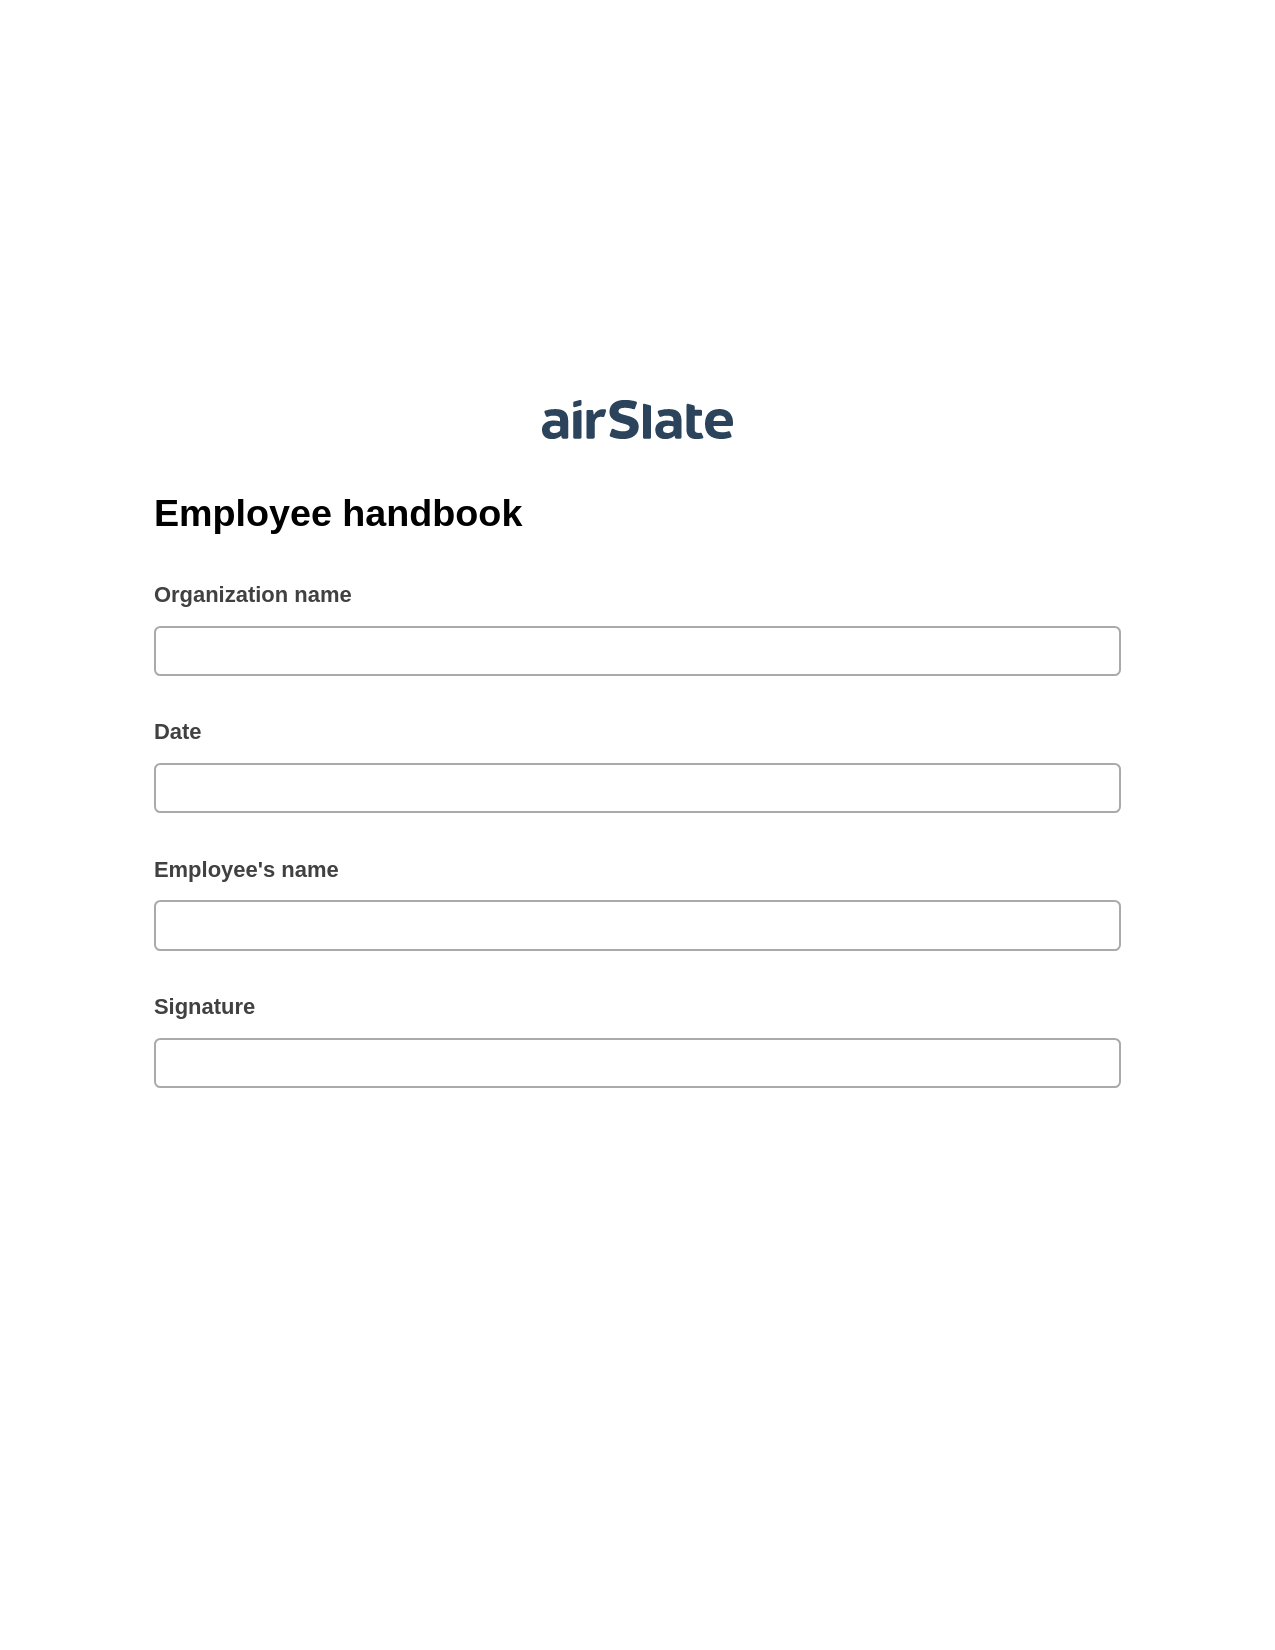 Employee handbook Pre-fill from another Slate Bot, Webhook Bot, Export to Salesforce Bot